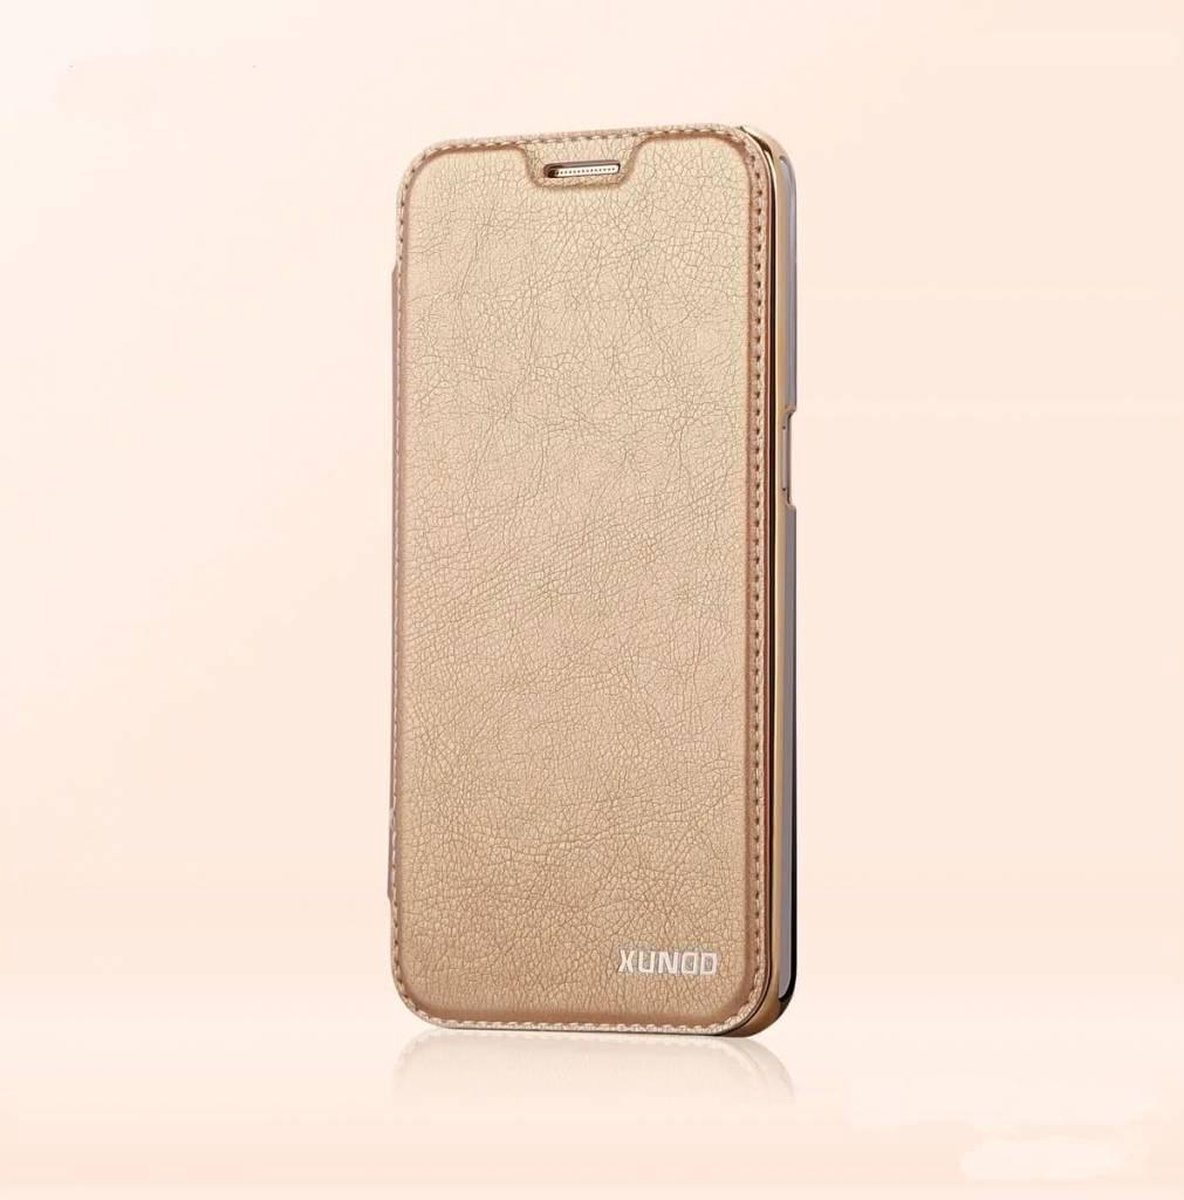 Xundd Goud flip folio PU Leather hoesje met transparant back case voor Galaxy s7